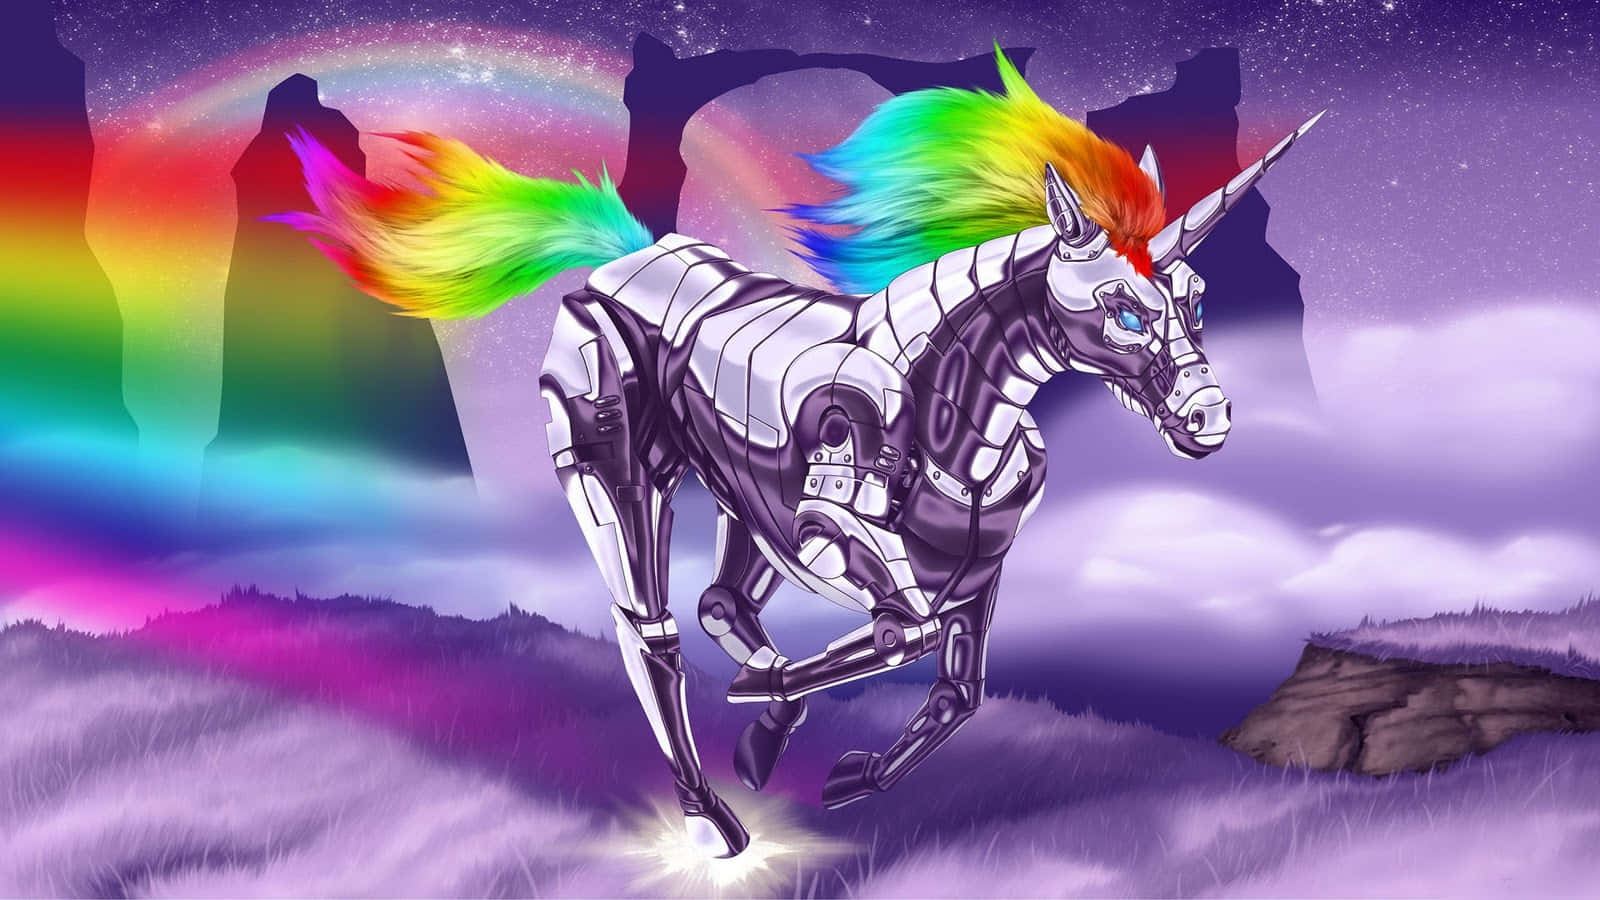 A Dreamy Rainbow Unicorn